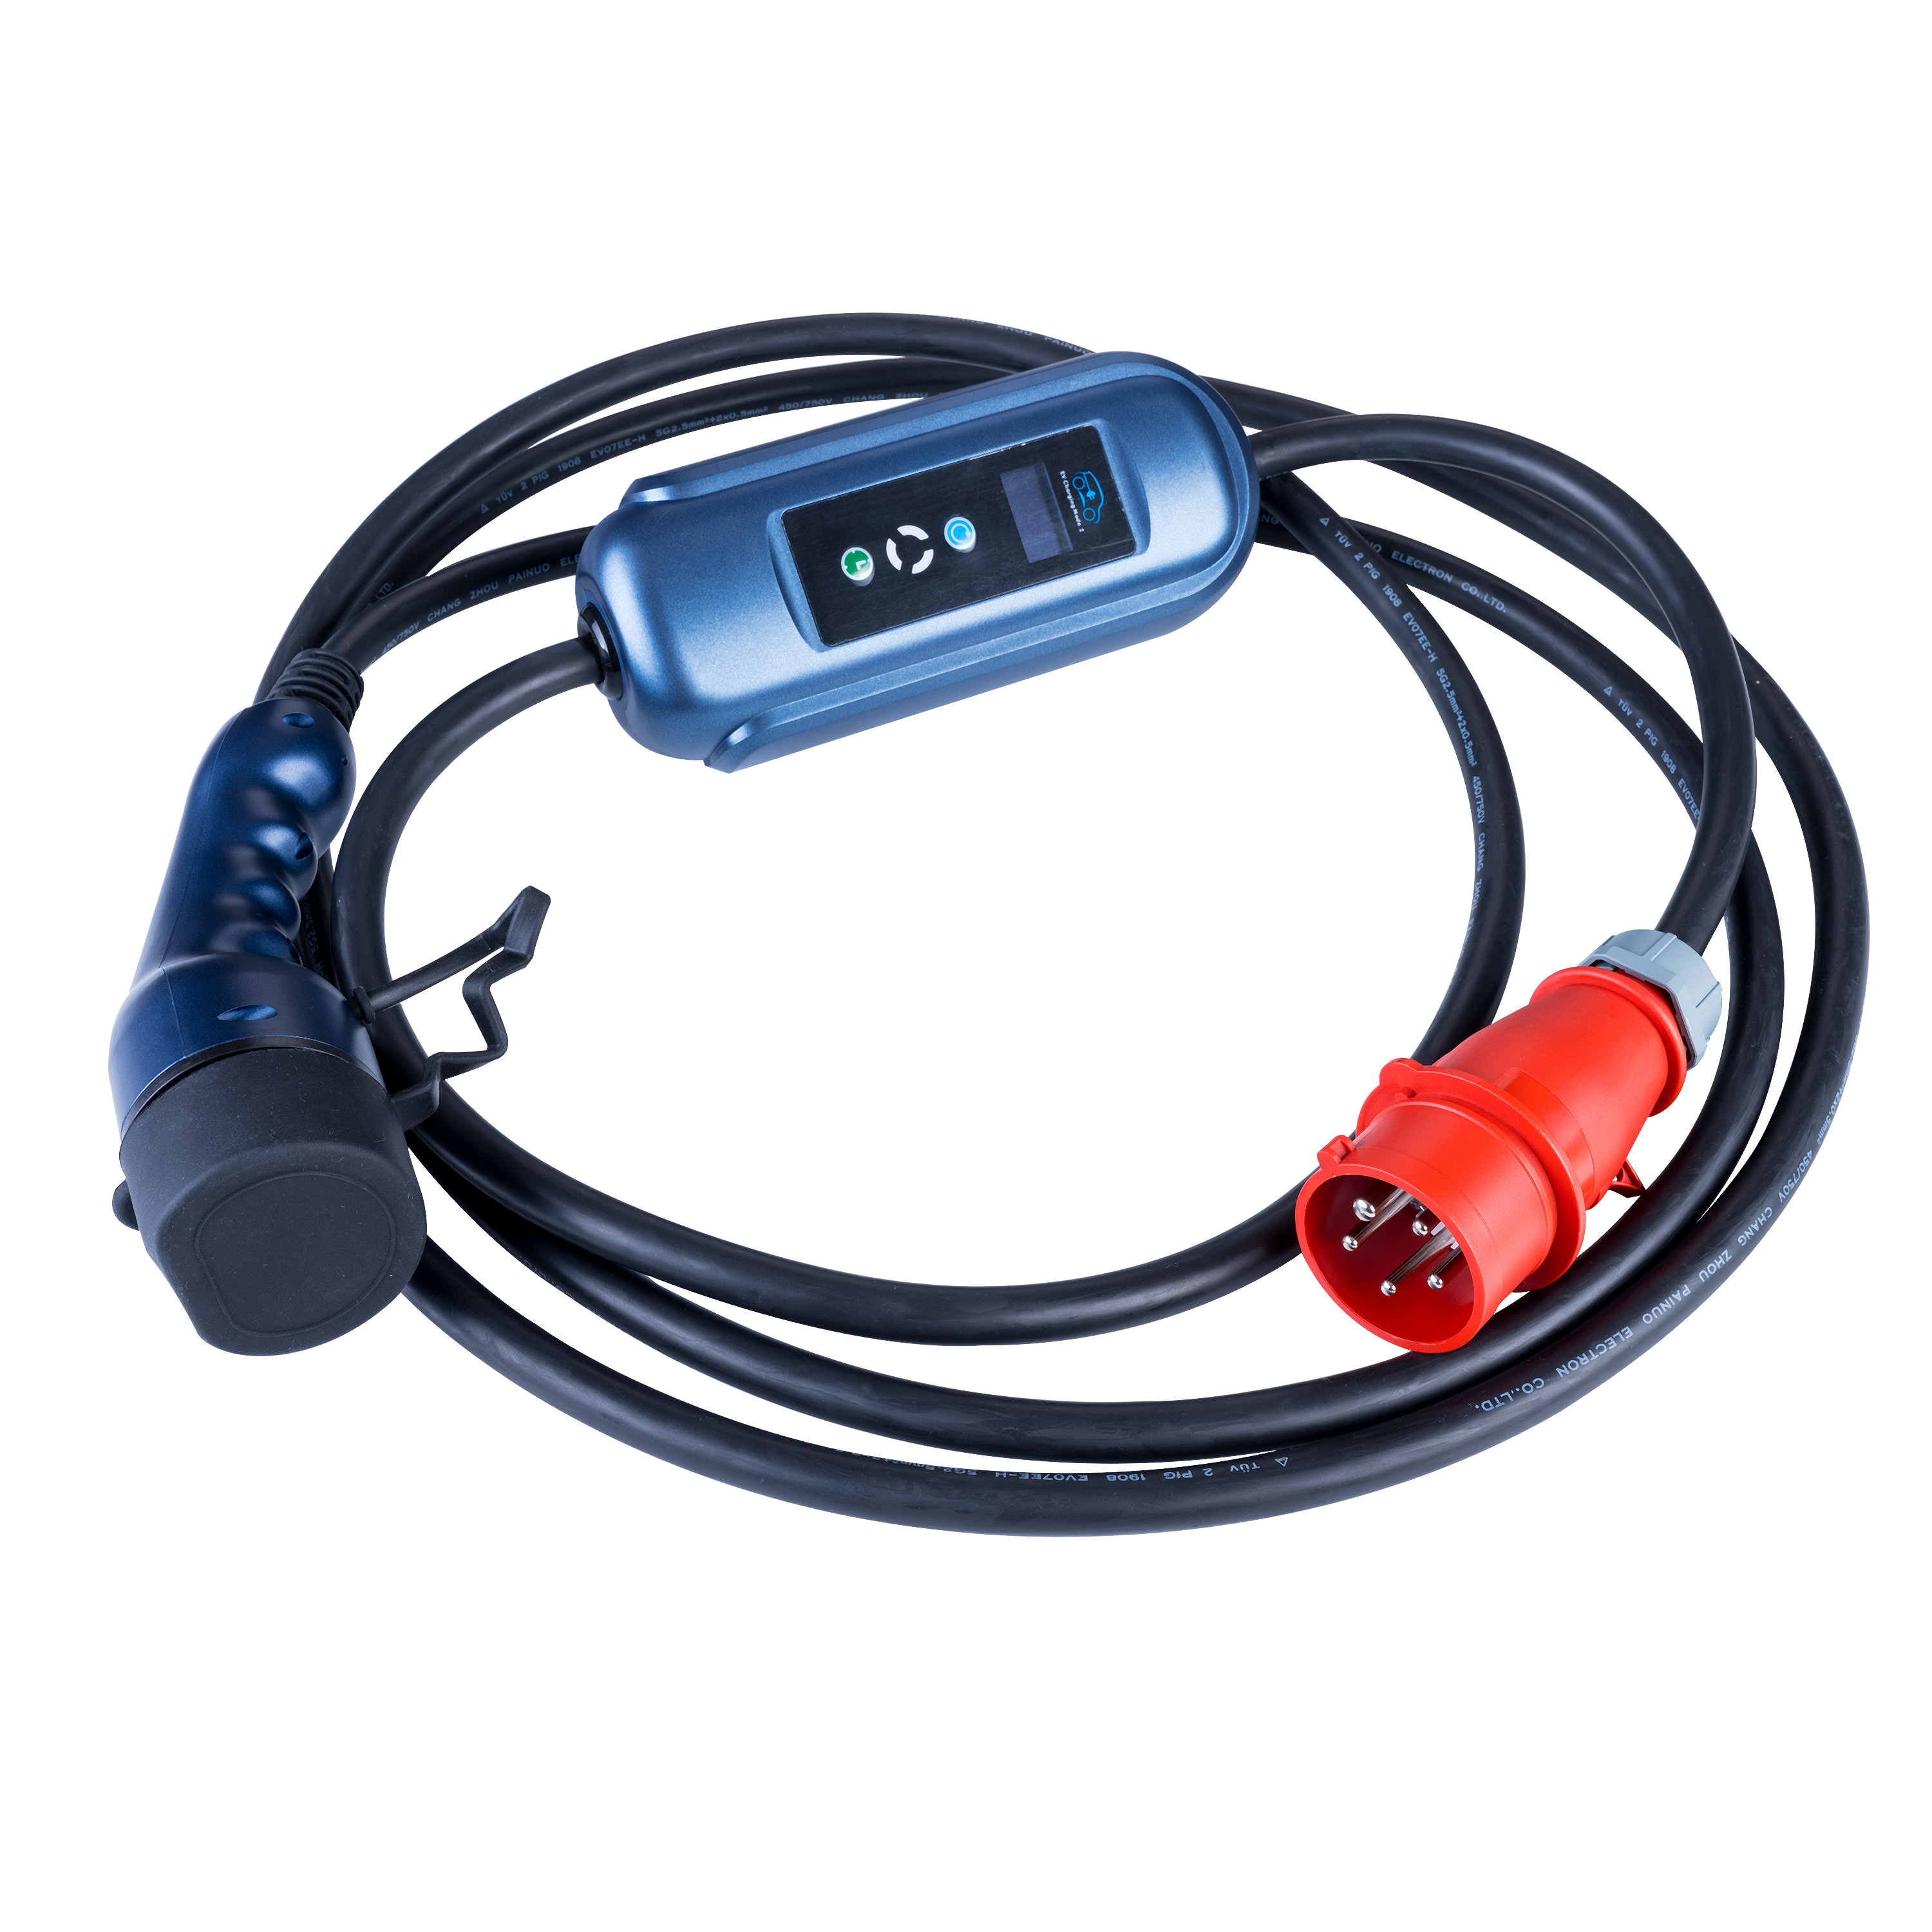 main_image Kabel für Elektroautos AK-EC-12 CEE 5pin / Type2 LCD 16A 5m